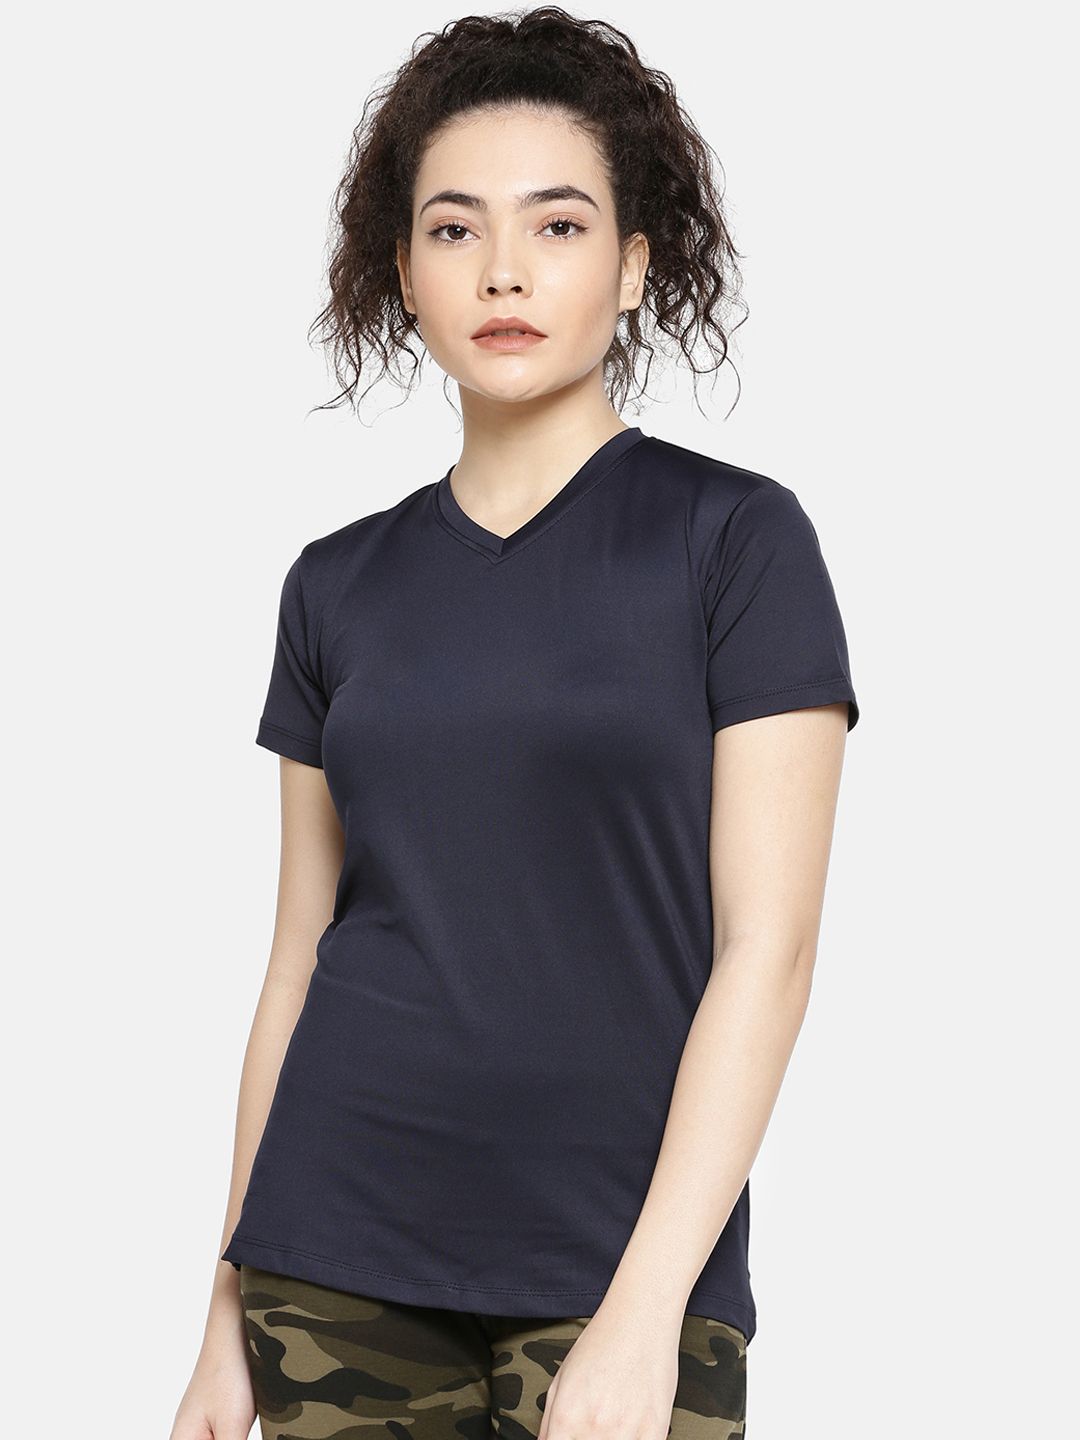 GOLDSTROMS Women Navy Blue Solid V-Neck T-shirt Price in India